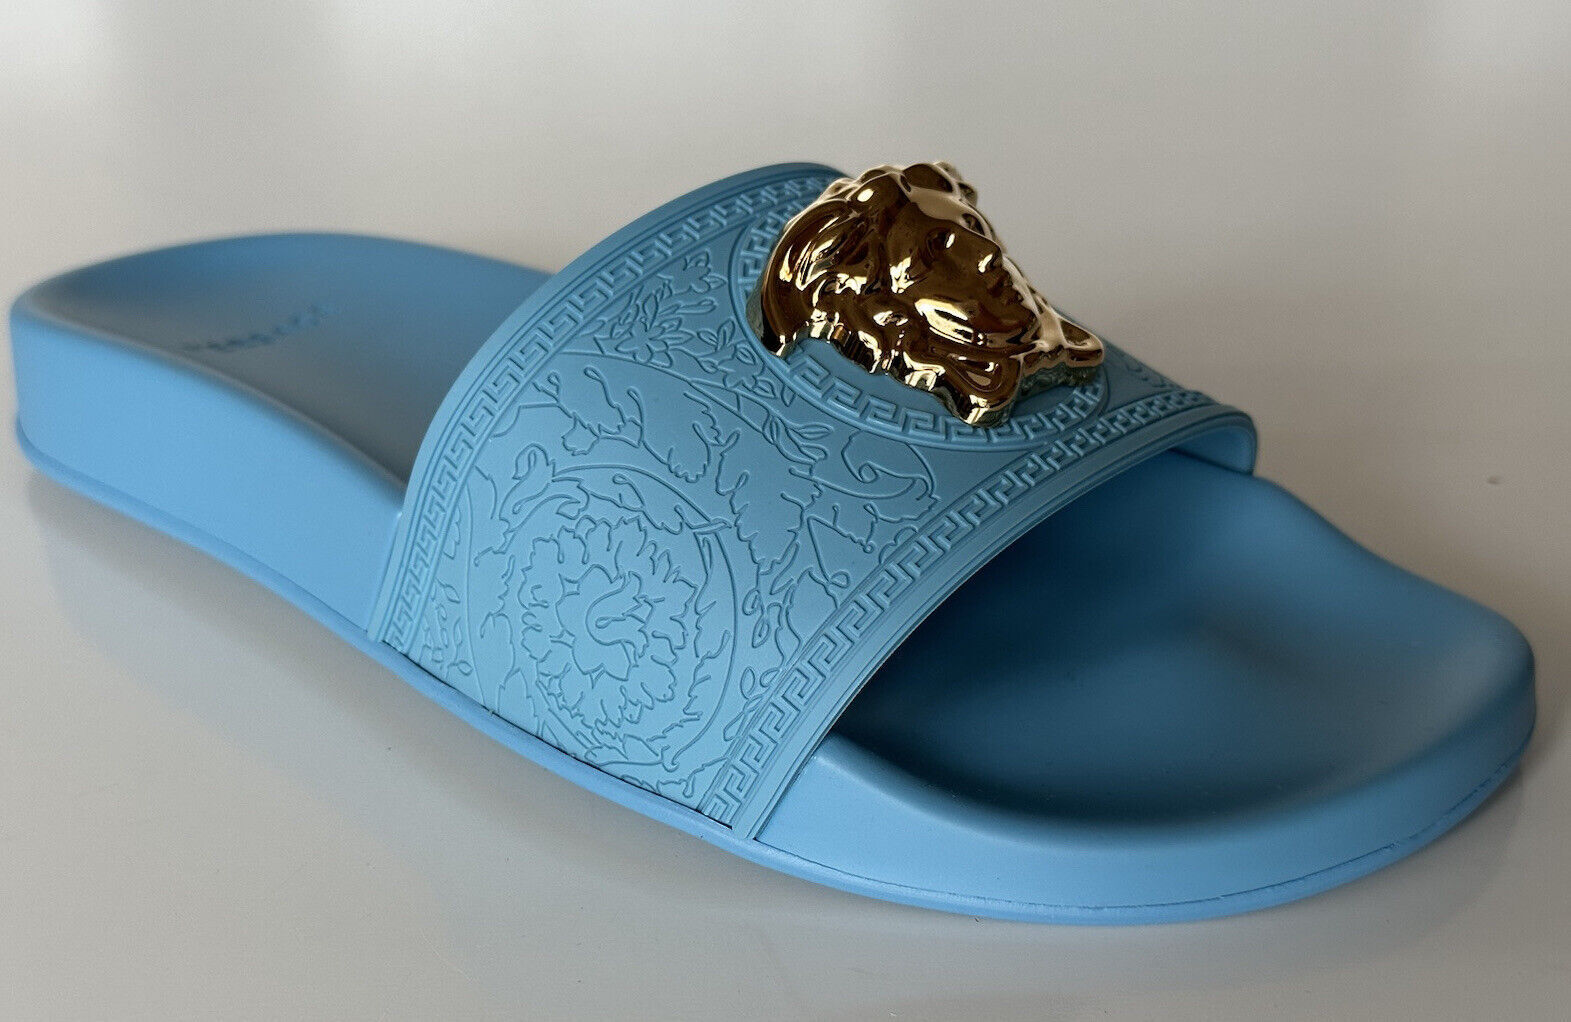 NIB $450 Versace Gold Medusa Head Slides Sandals Sky Blue 9 US (39) 1004190 IT